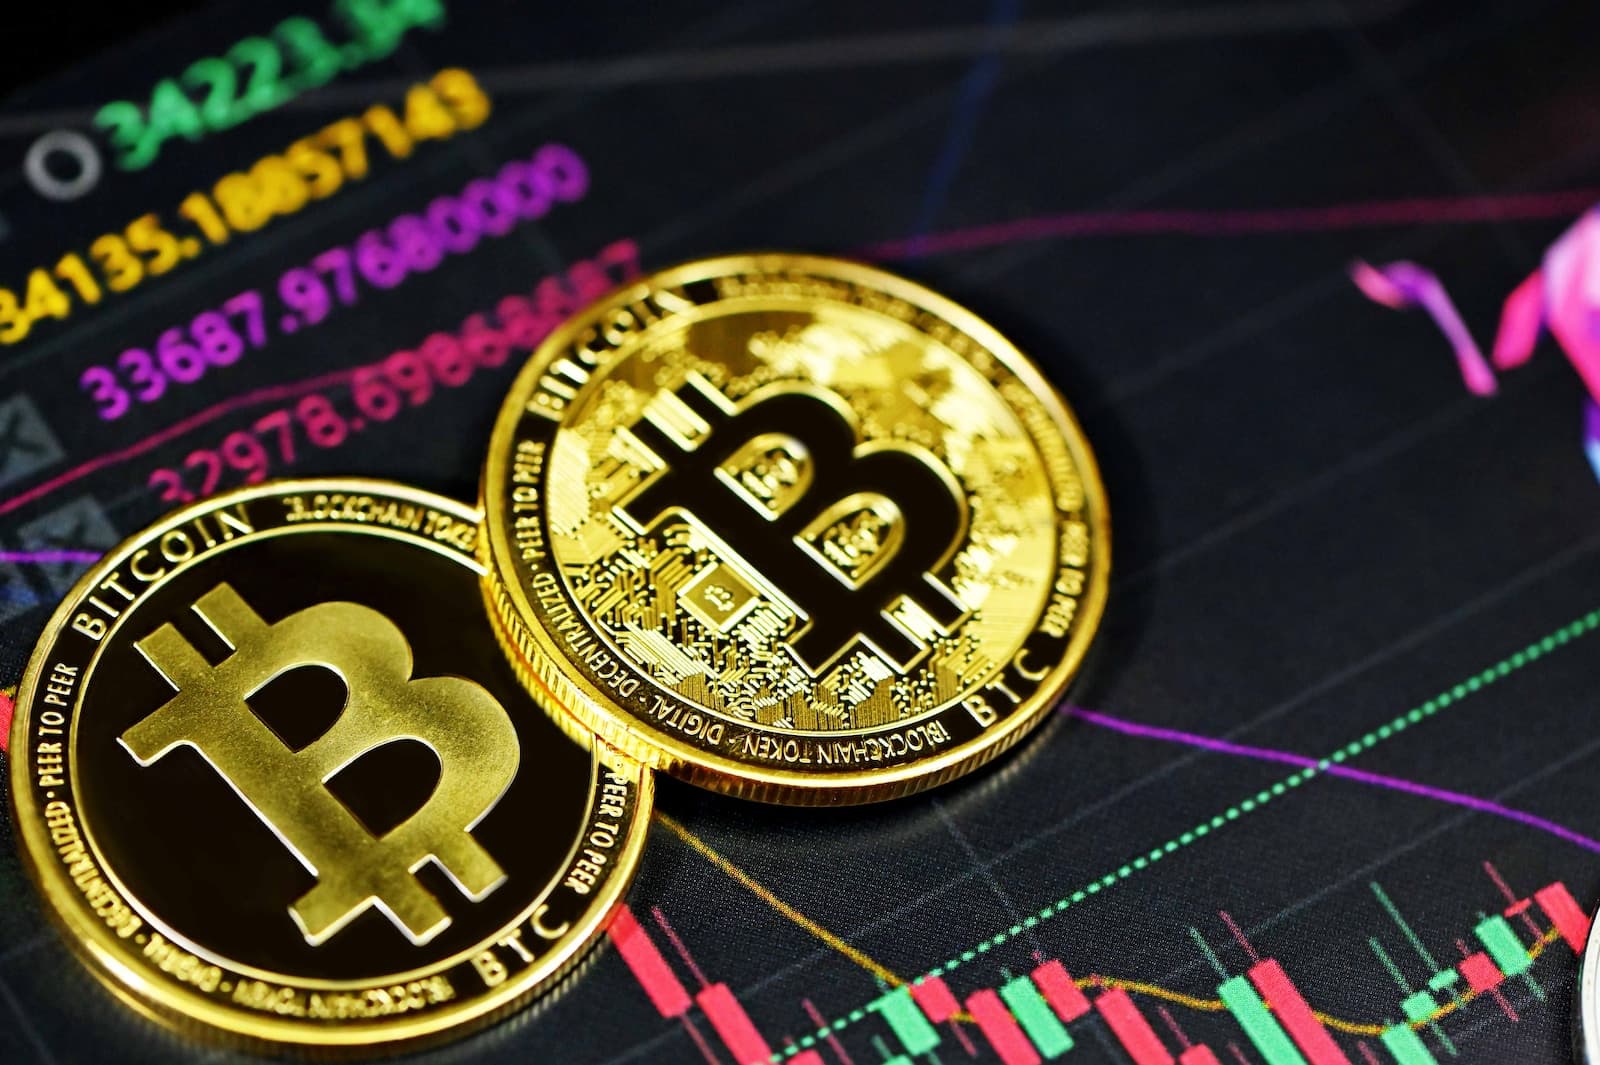 Bitcoin Kurs Analyse